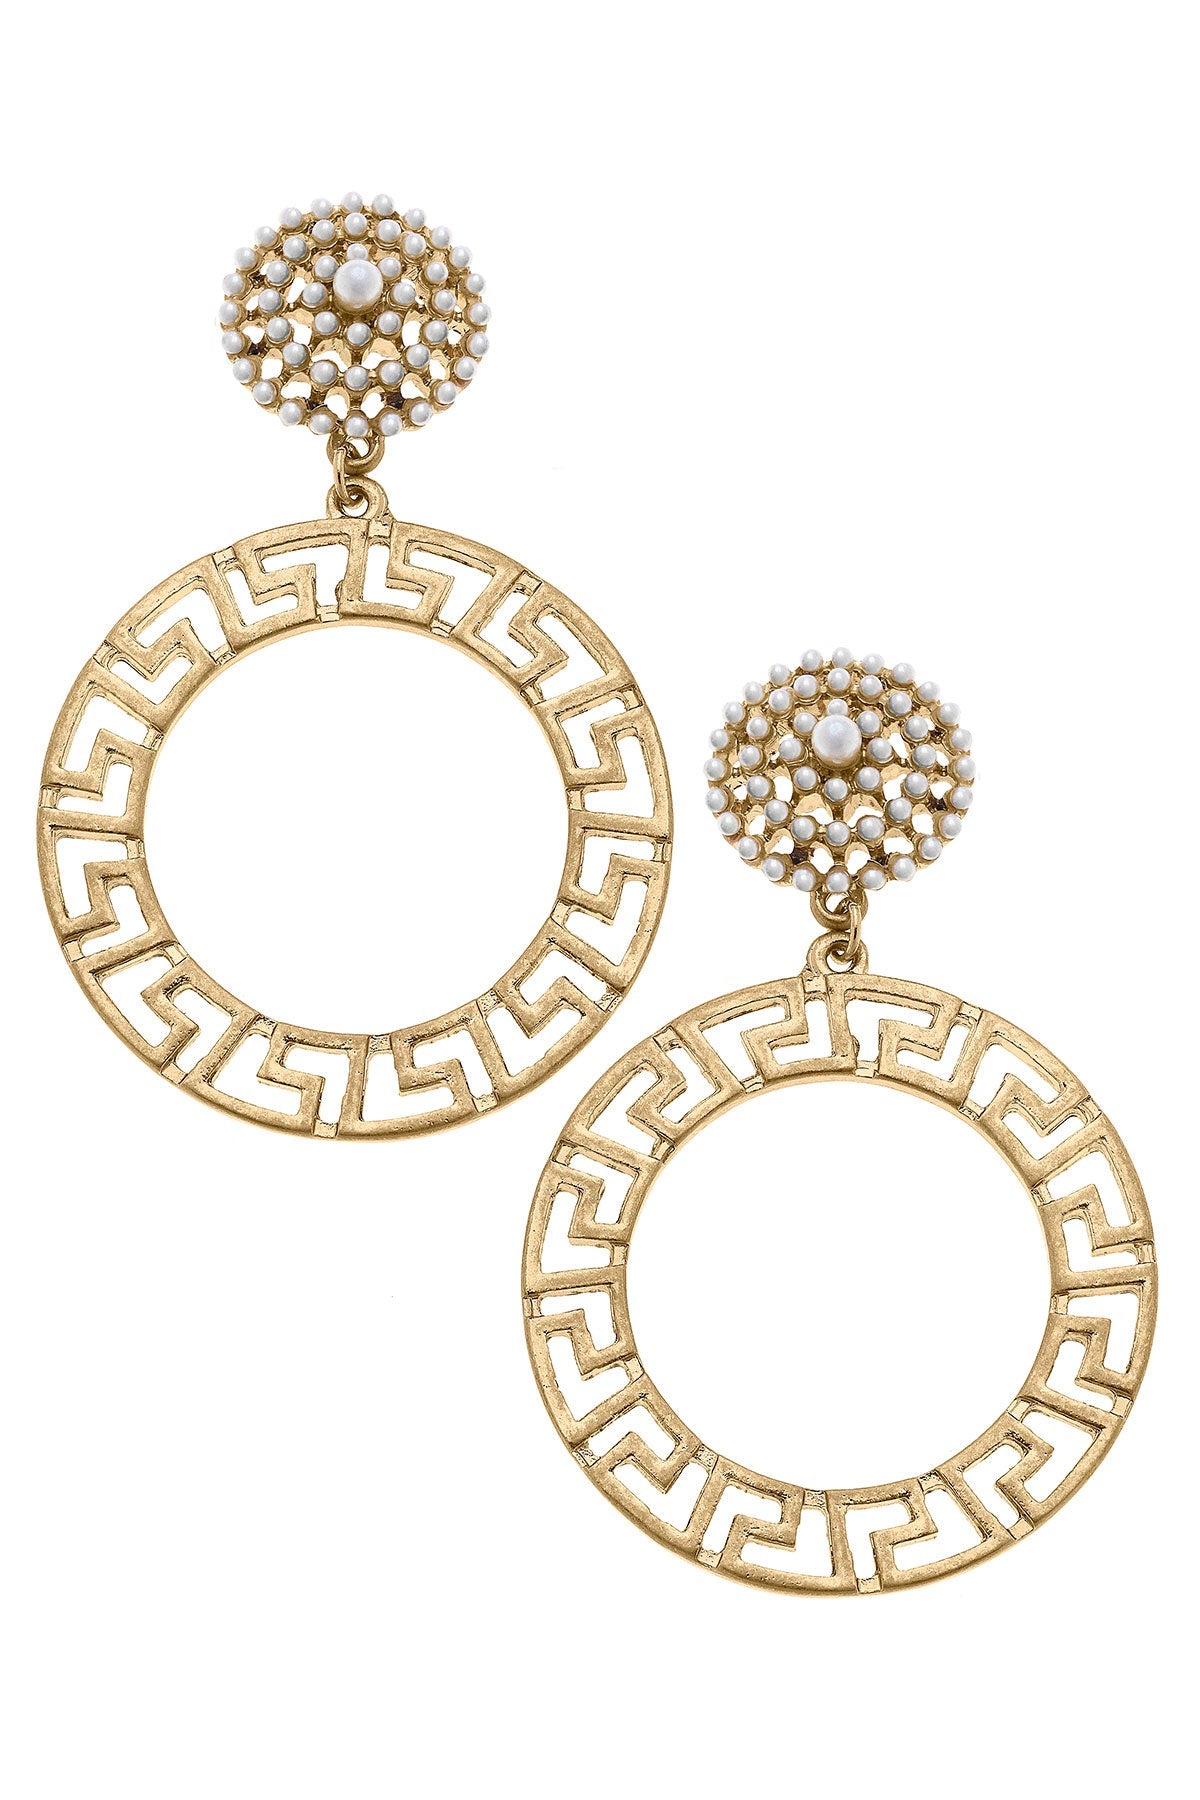 Emilia Greek Keys Circle & Pearl Studded Statement Earrings in Worn Gold